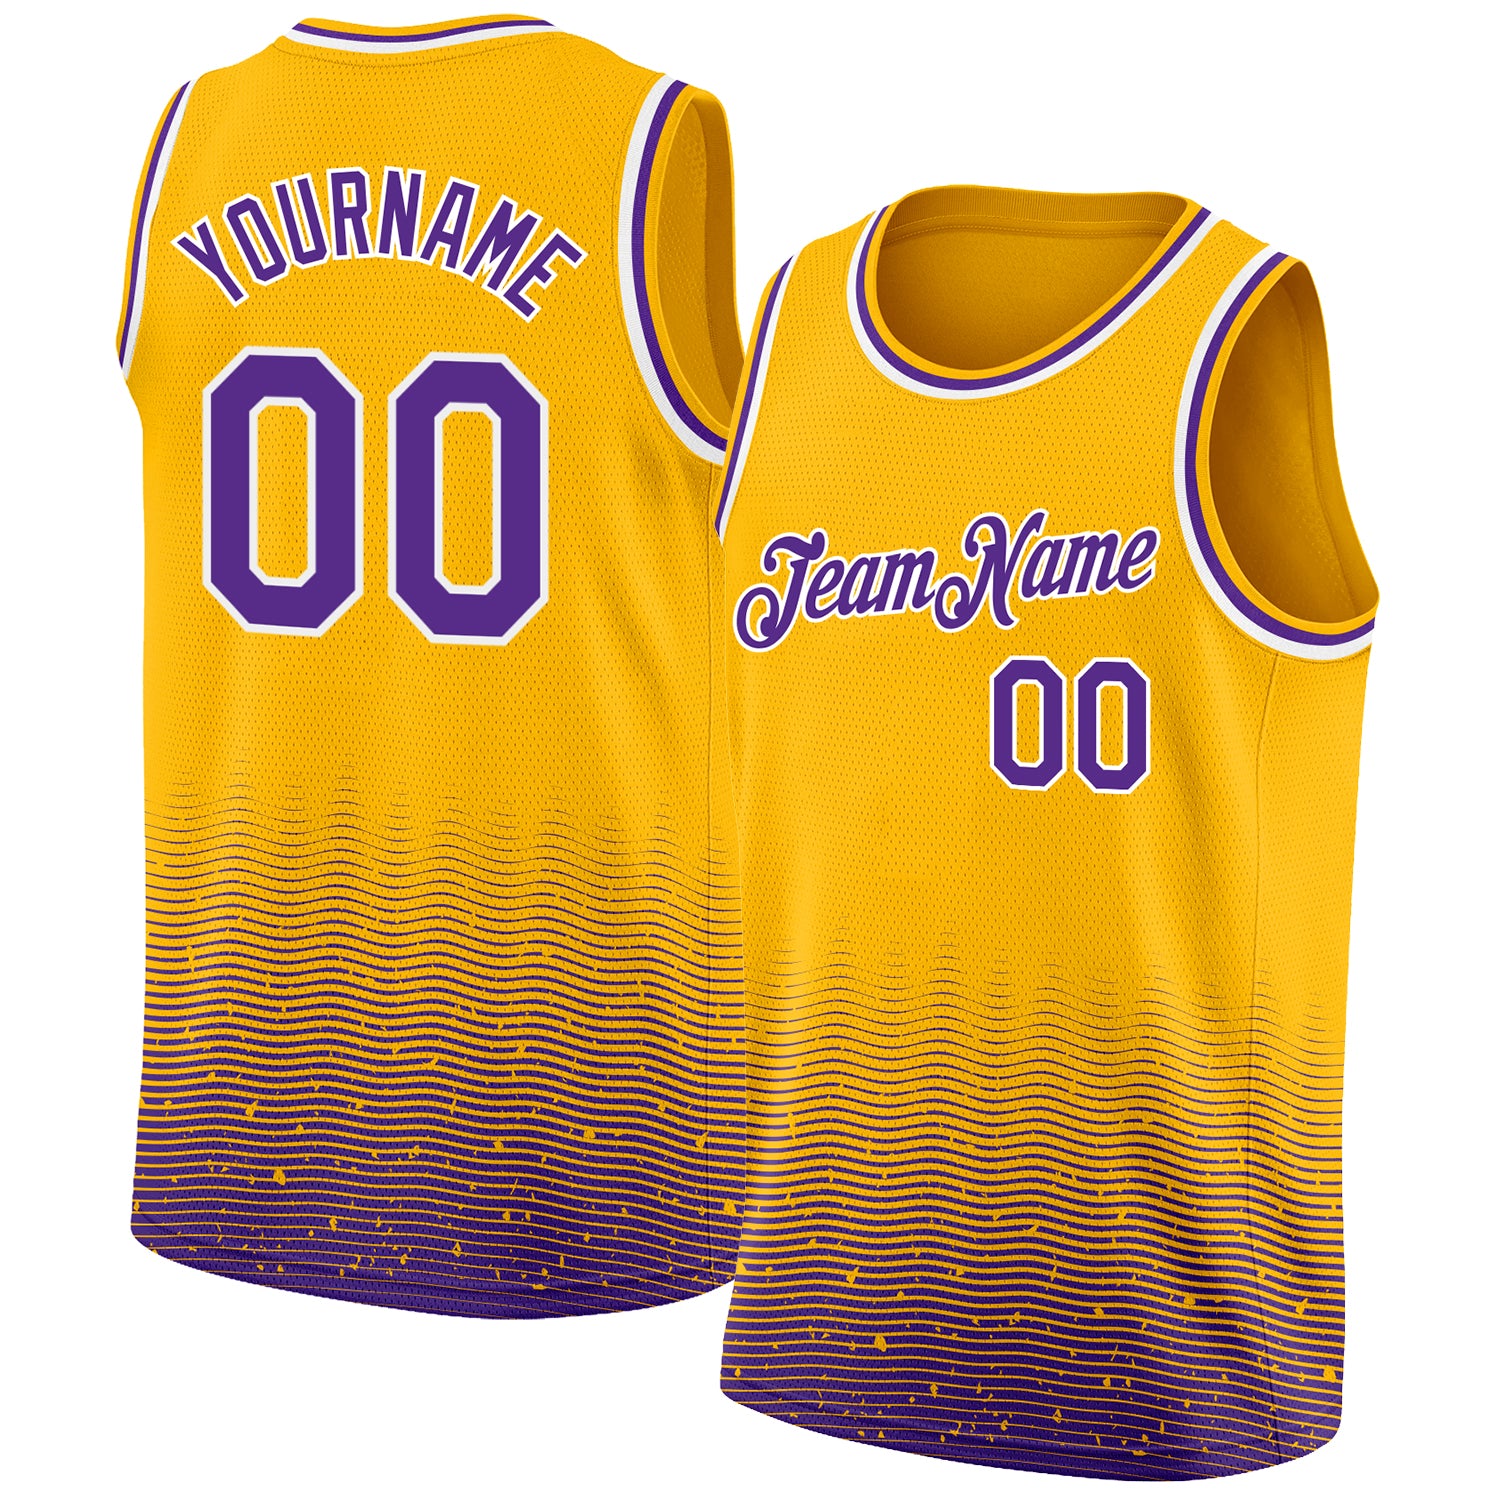 Custom Los Angeles Lakers Jerseys, Lakers Custom Basketball Jerseys